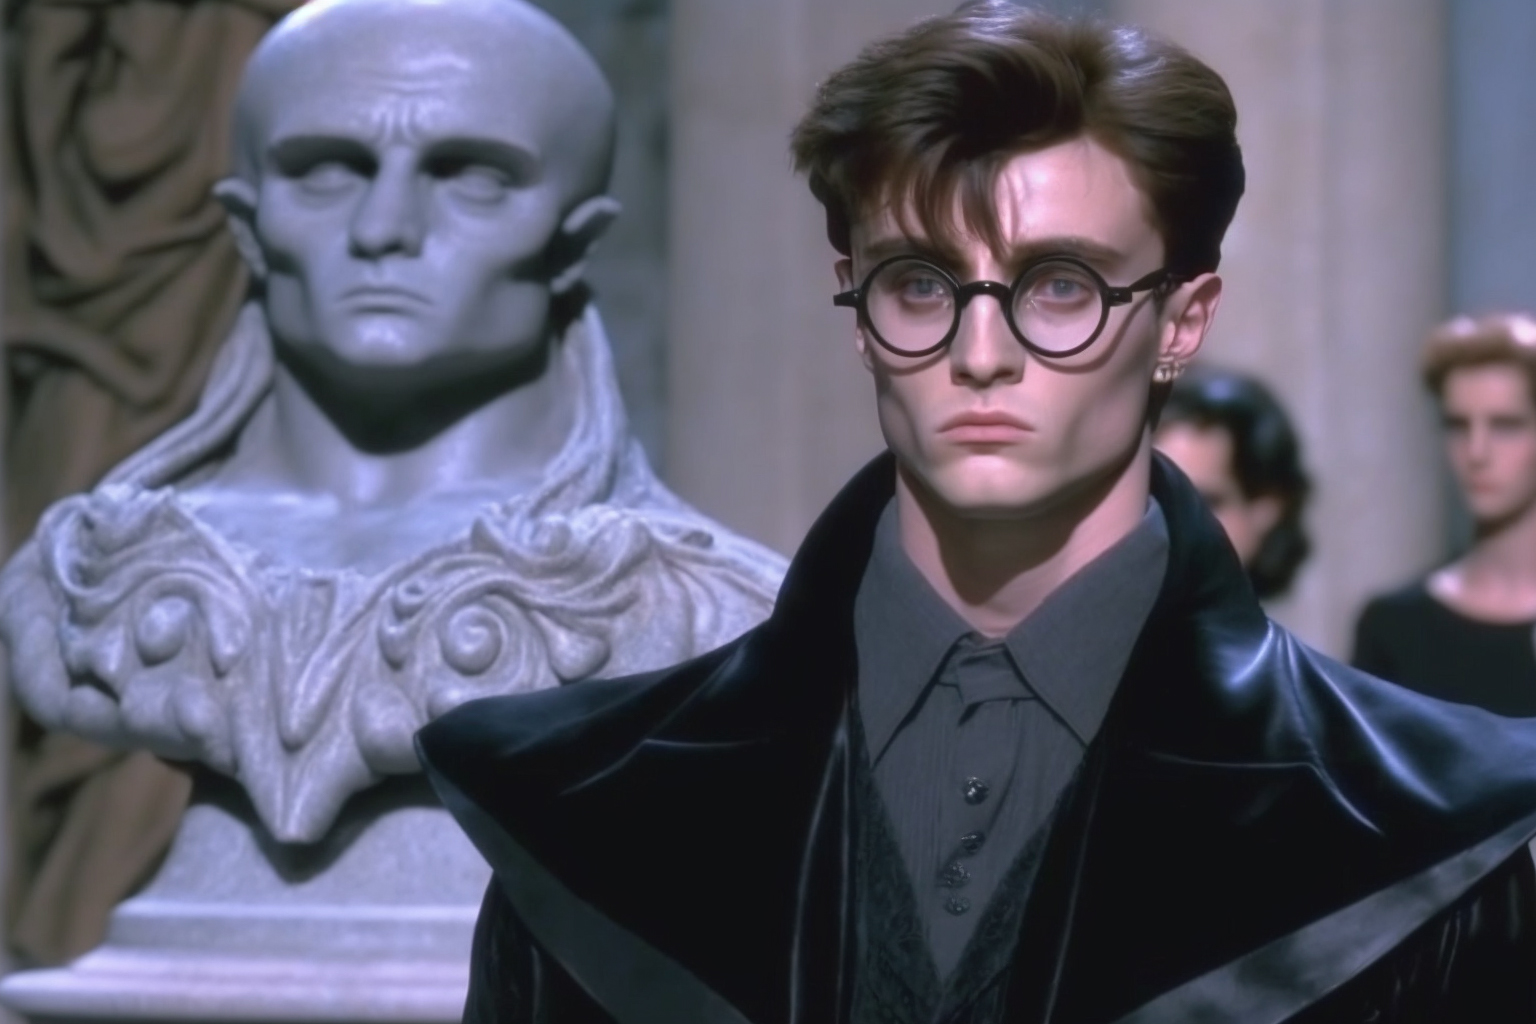 Screenshot aus dem Video "Harry Potter by Balenciaga" von demonflyingfox